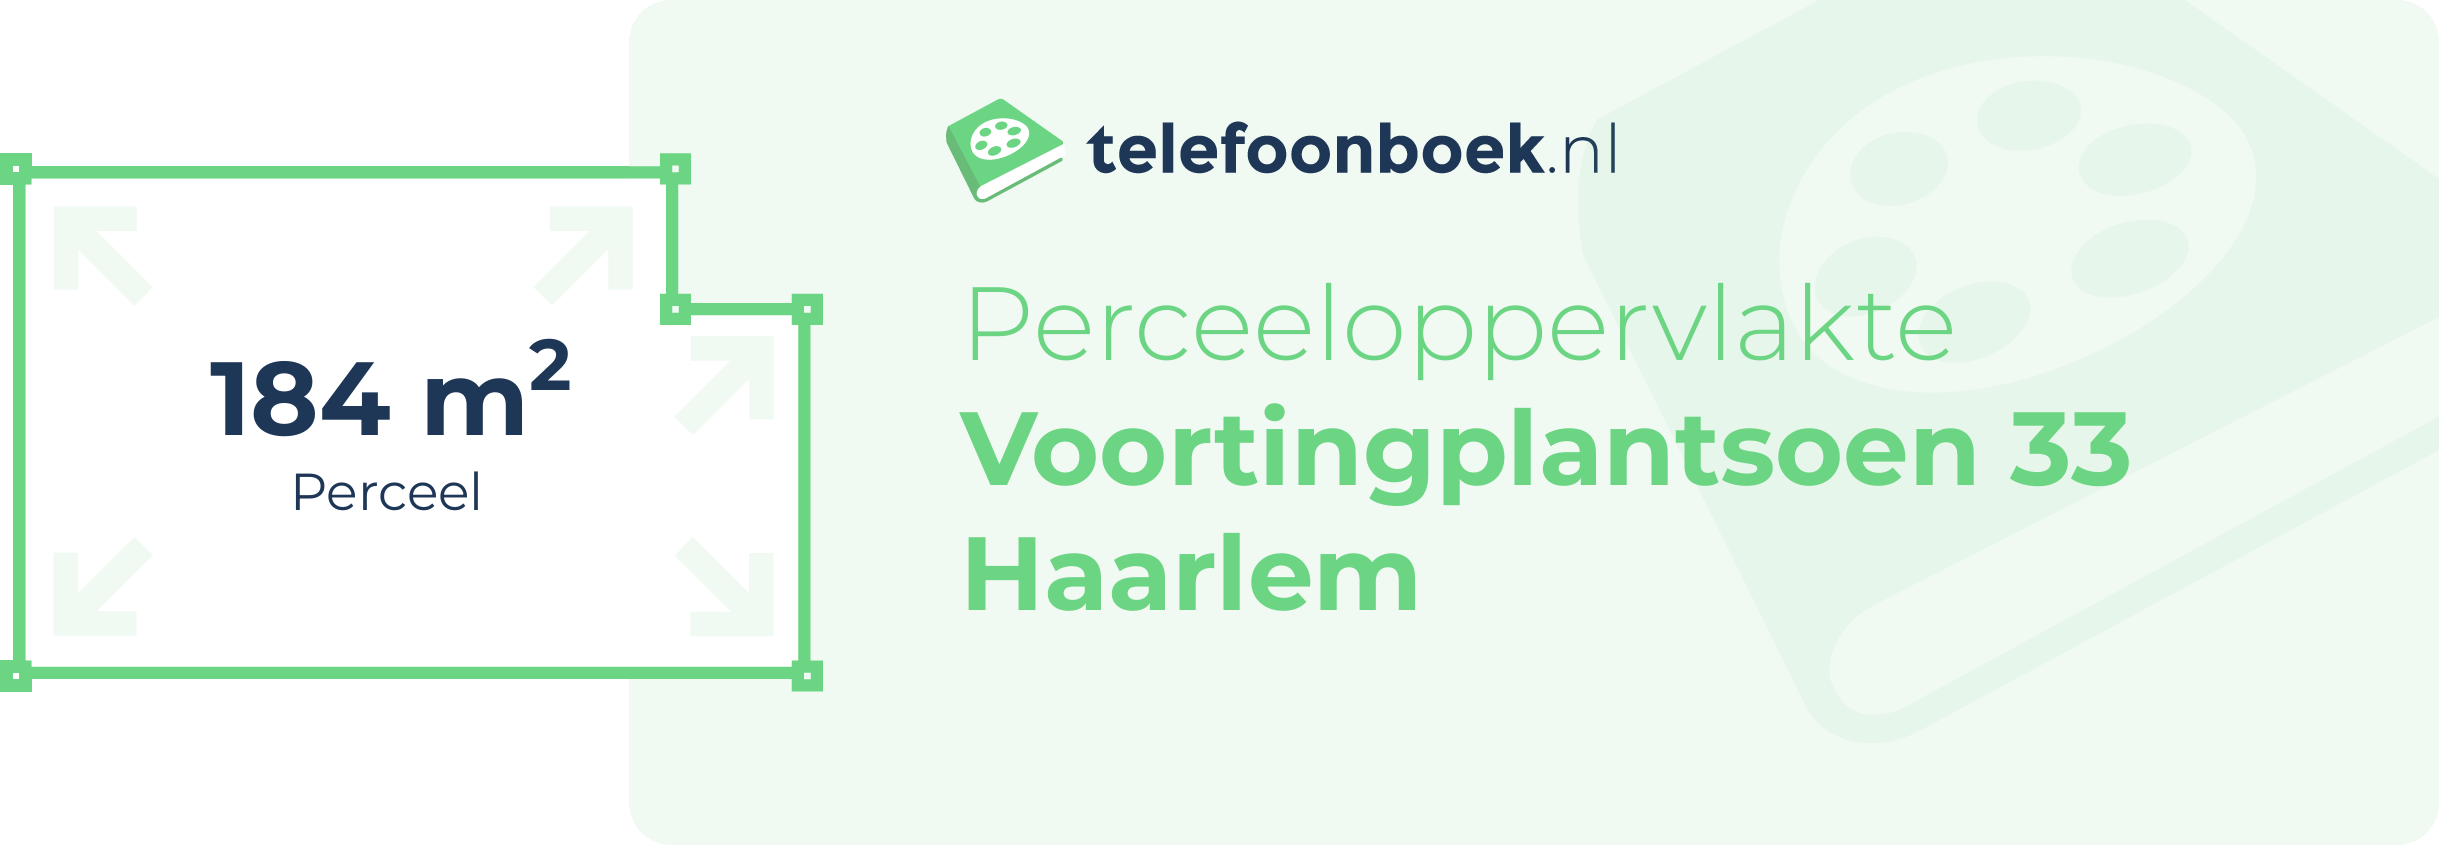 Perceeloppervlakte Voortingplantsoen 33 Haarlem